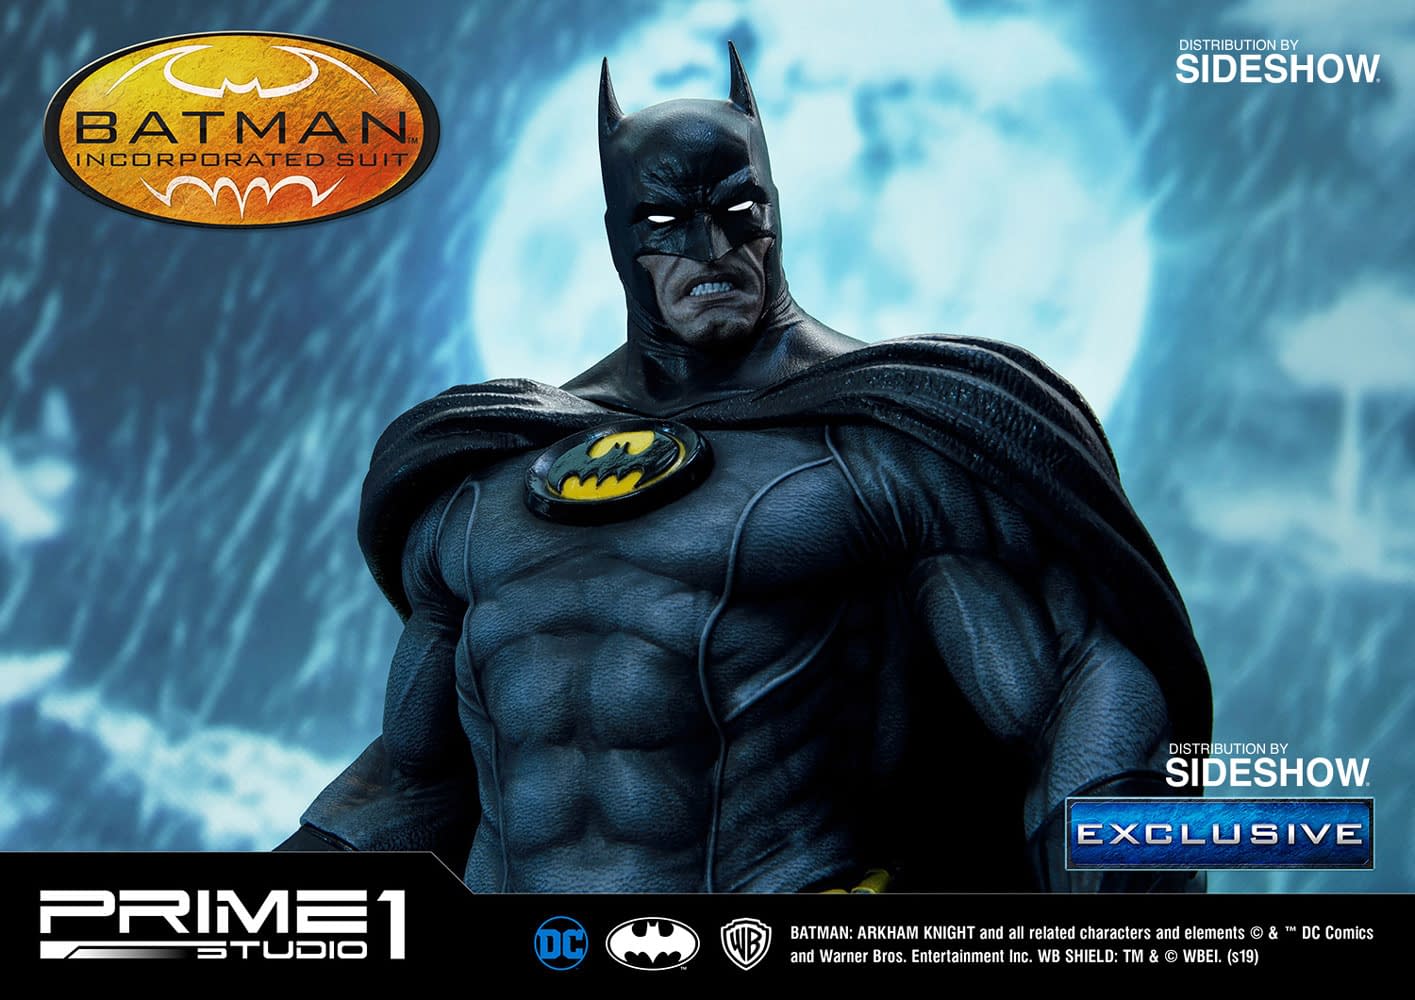 Batman Incorporated Prime 1 Studio Statue Goes Exclusive